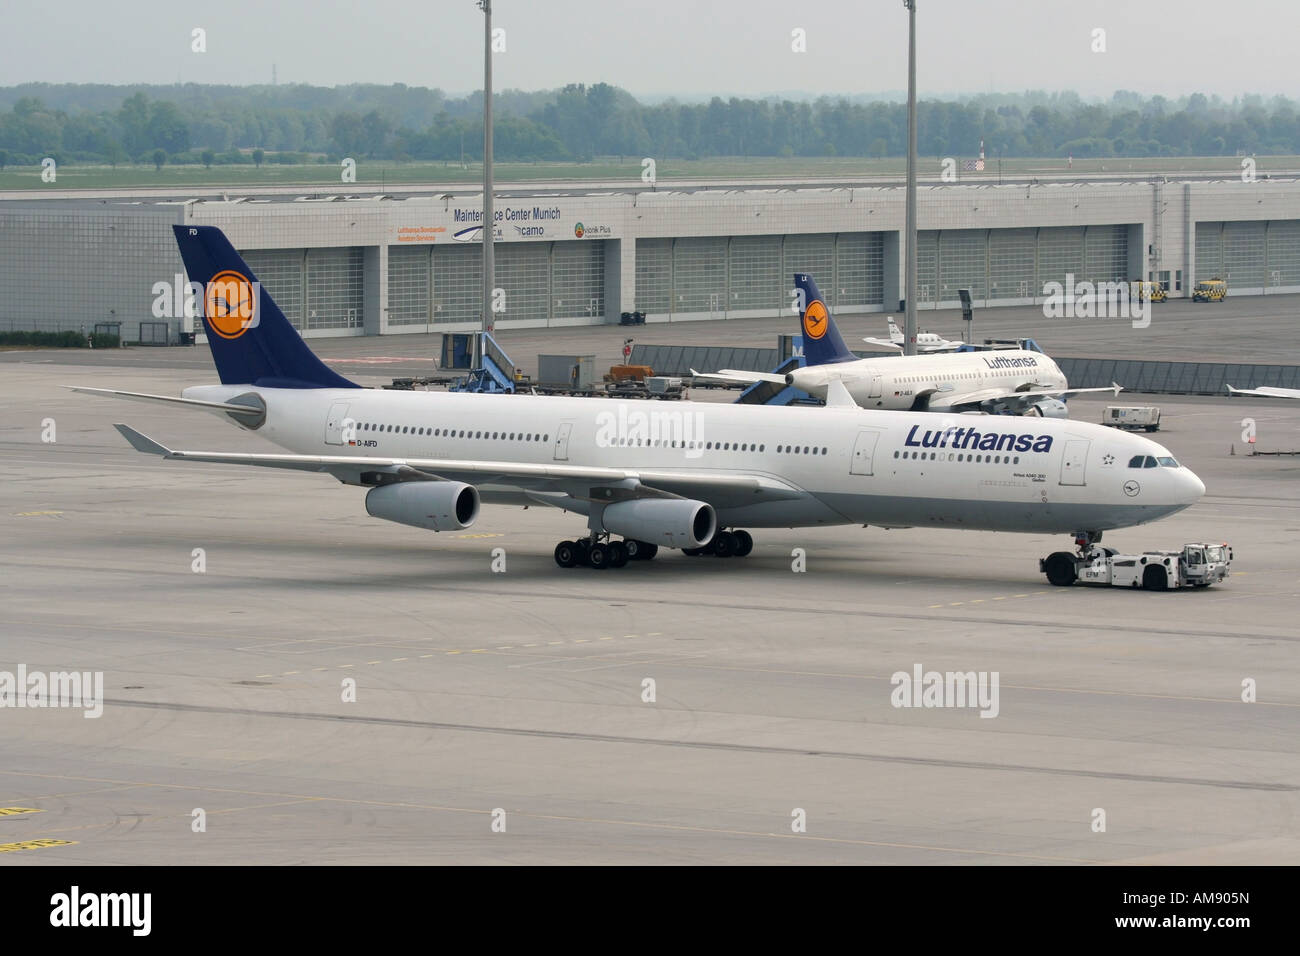 Lufthansa Airbus A340-300 passenger jet airplane under tow at Munich Airport Stock Photo